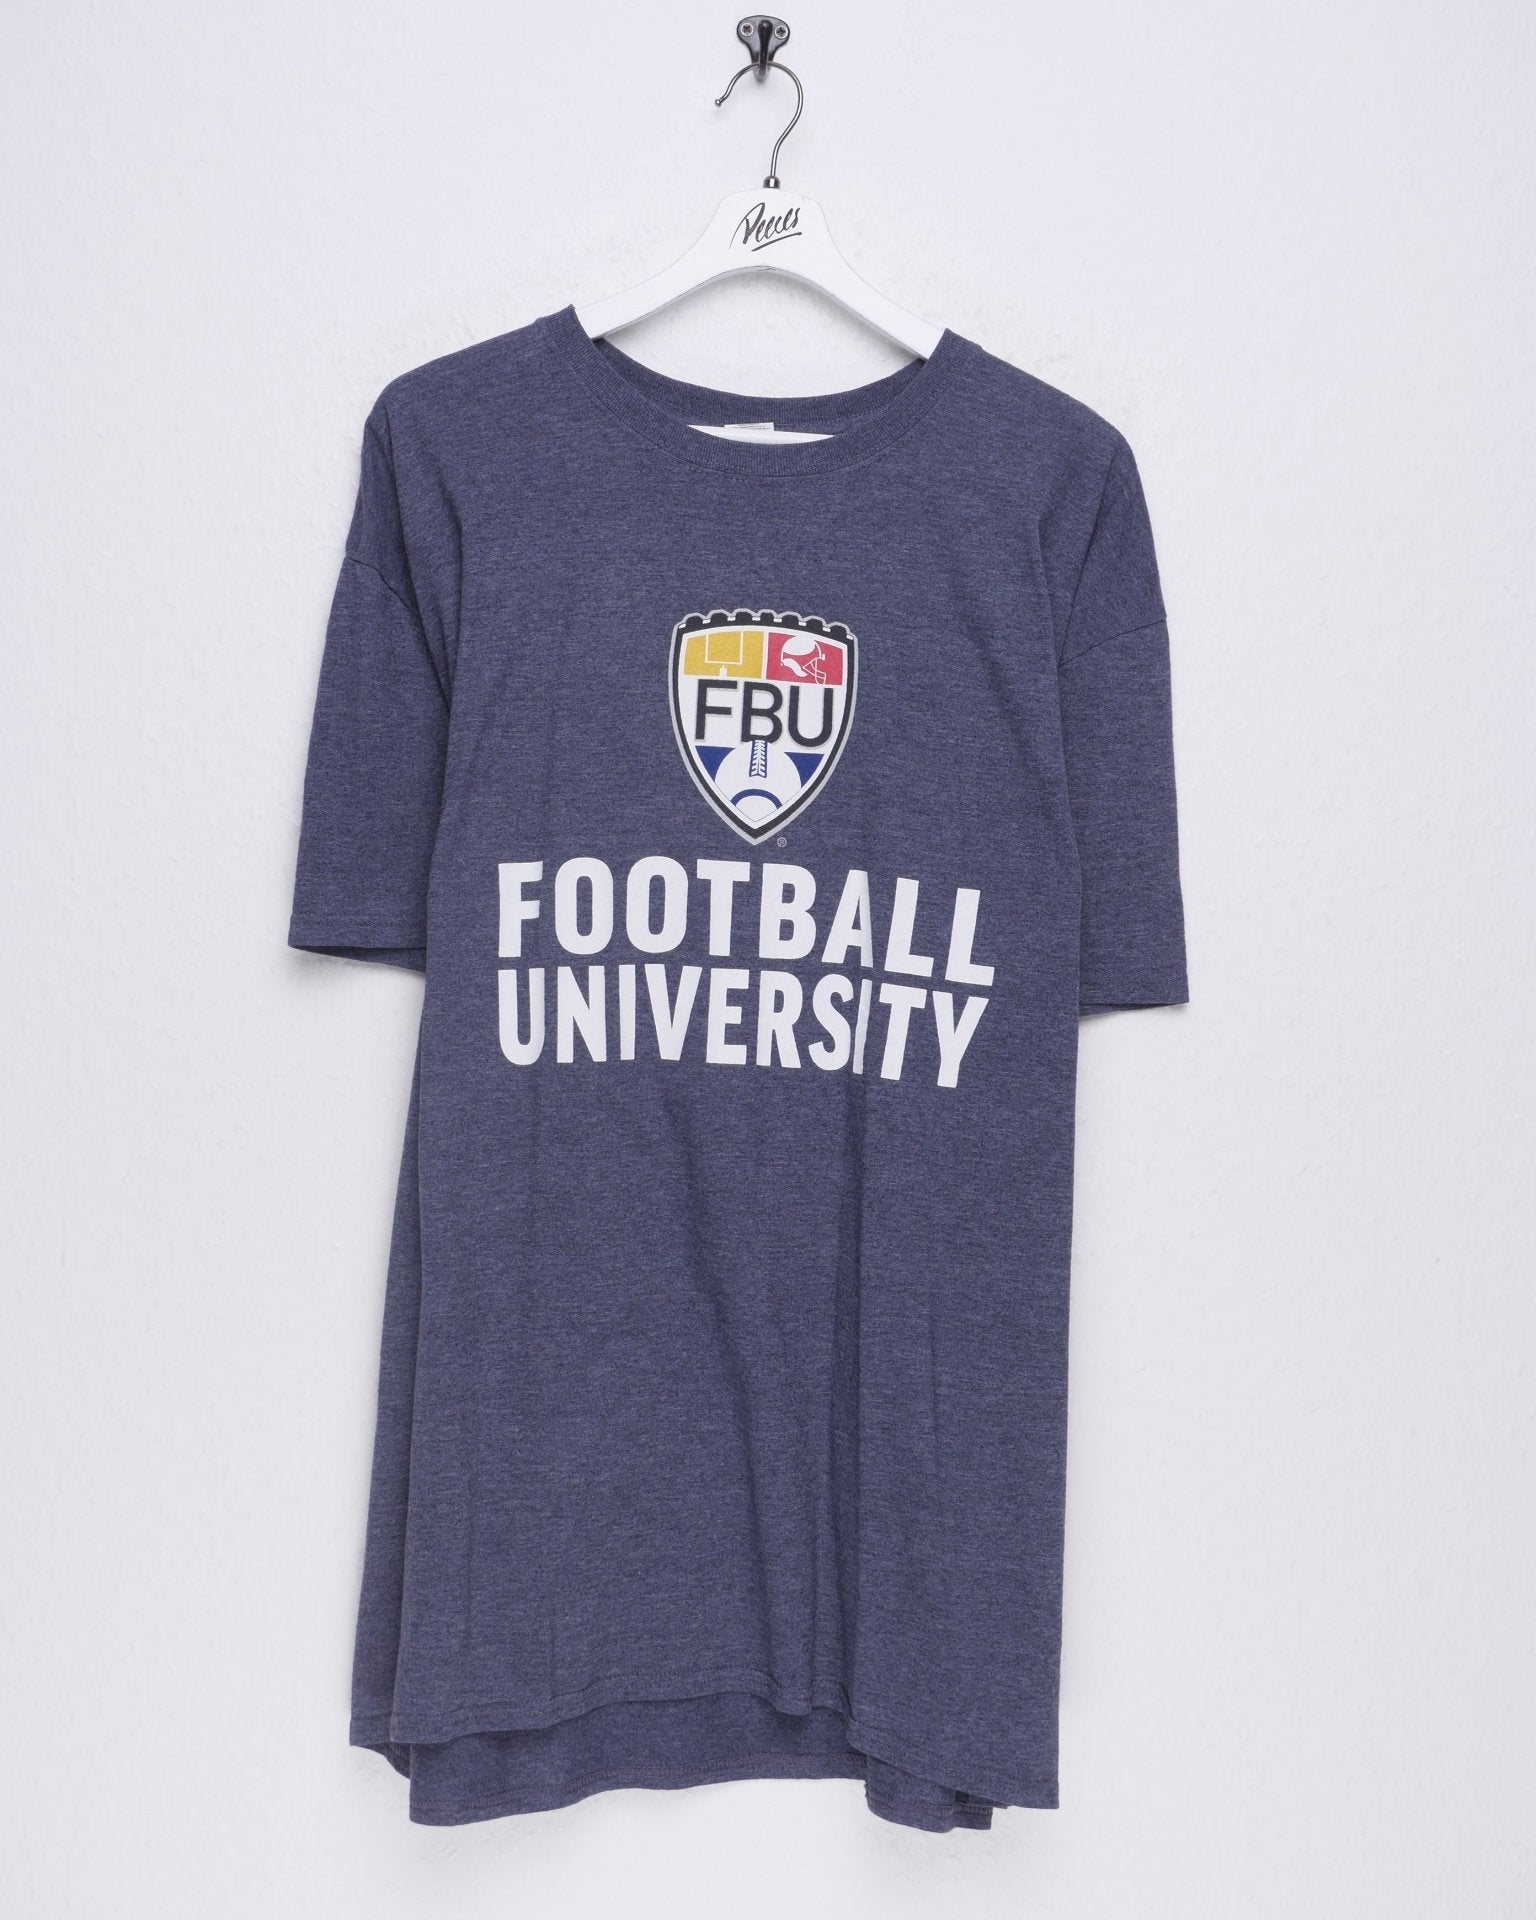 Football University printed Spellout Vintage Shirt - Peeces